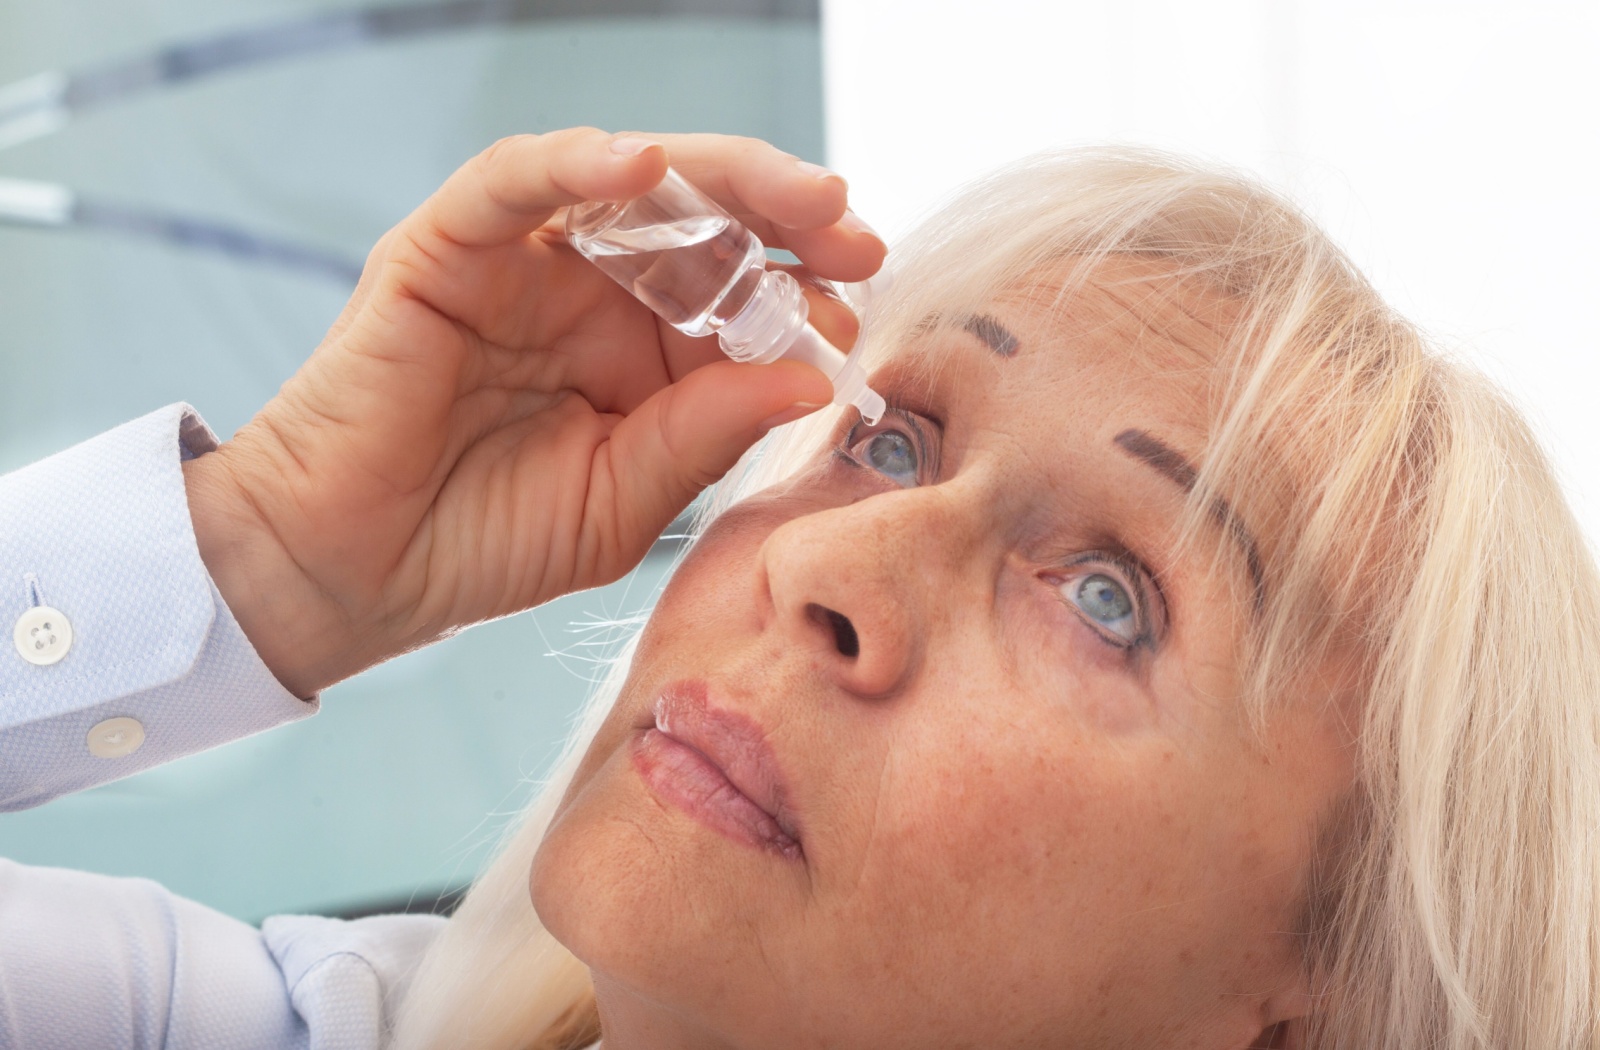 A woman applying eyedrops to alleviate dry eye symptoms.